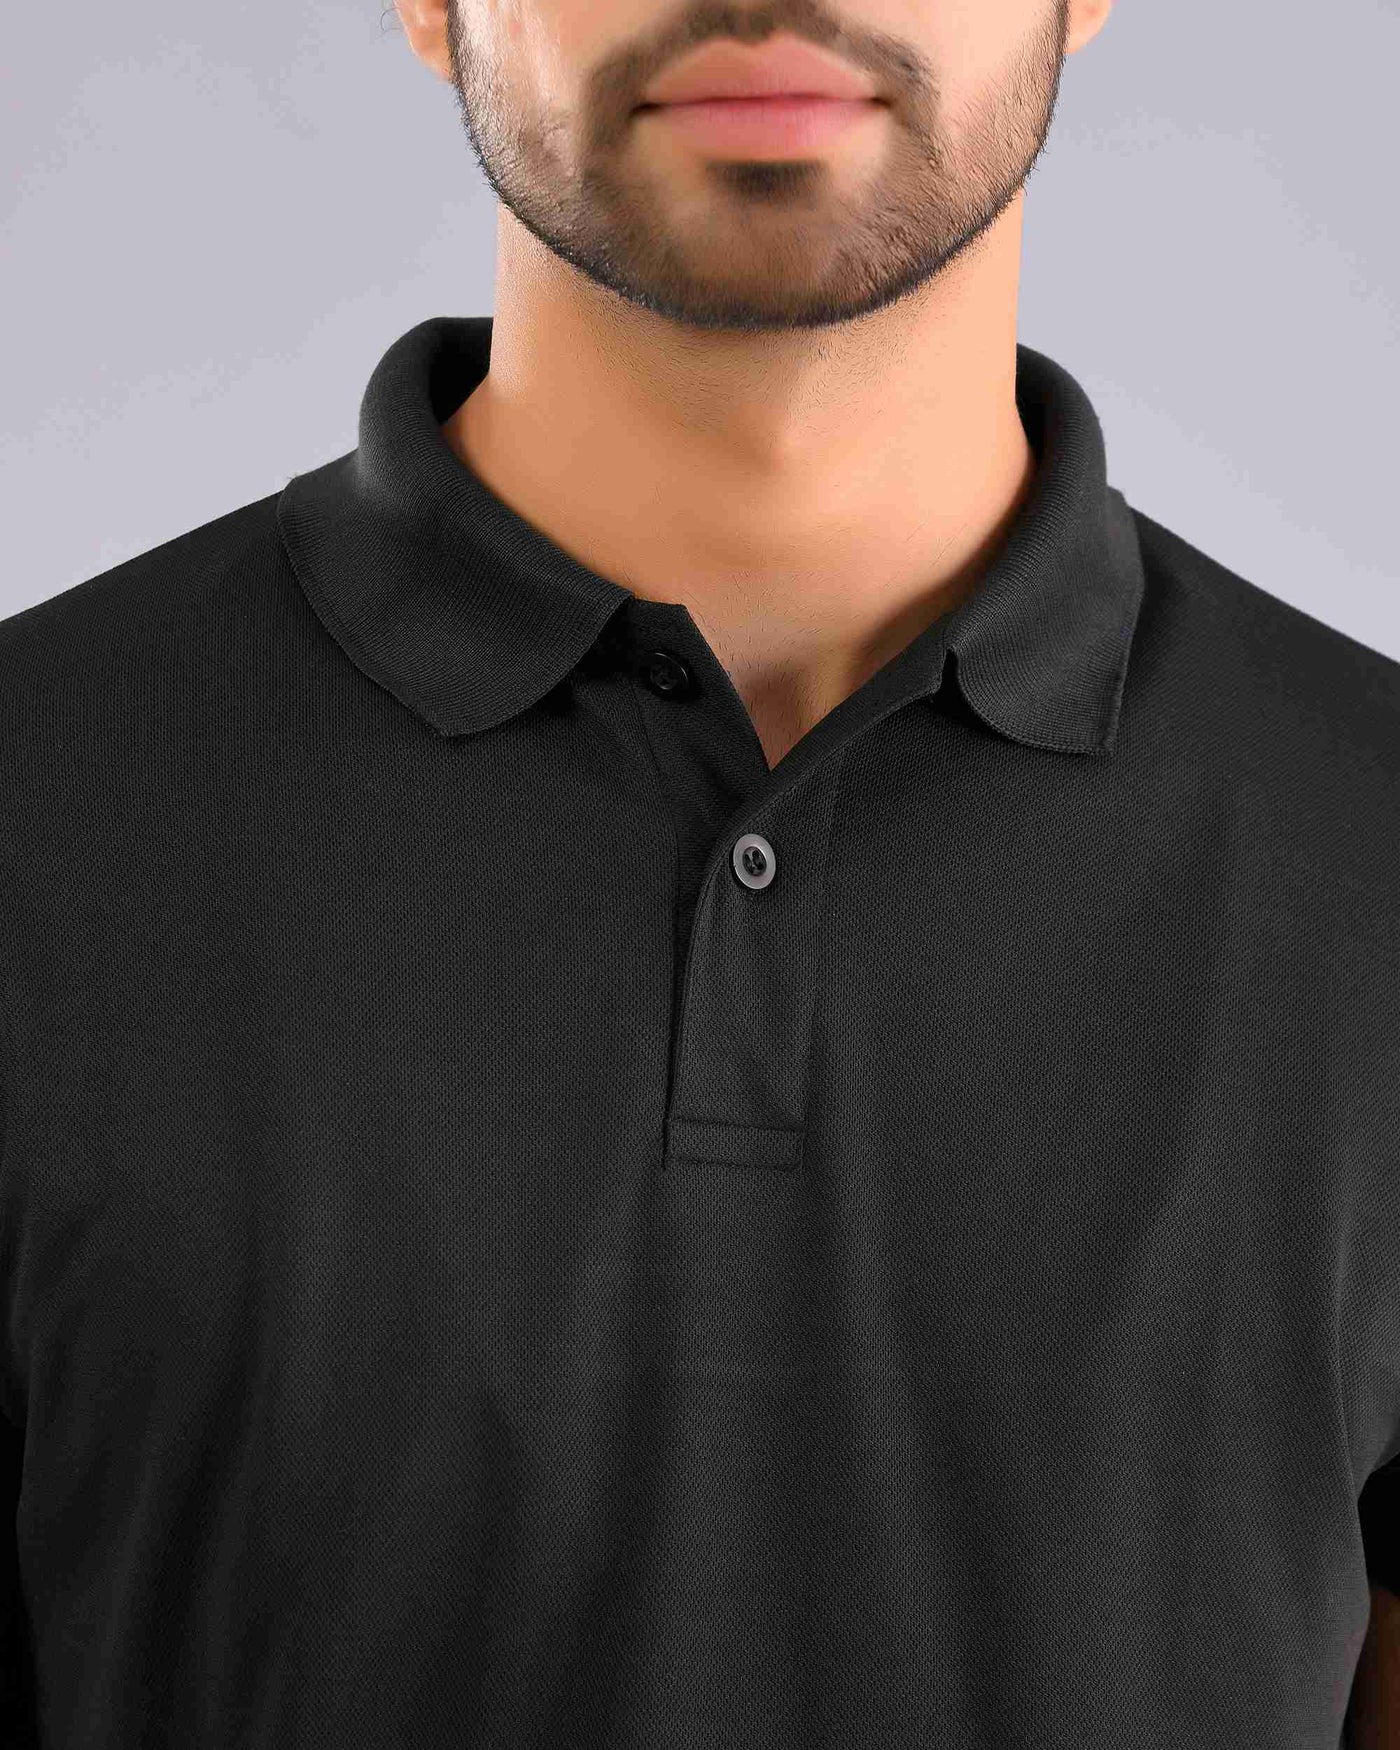 Dry Fit Black Polo T-Shirt